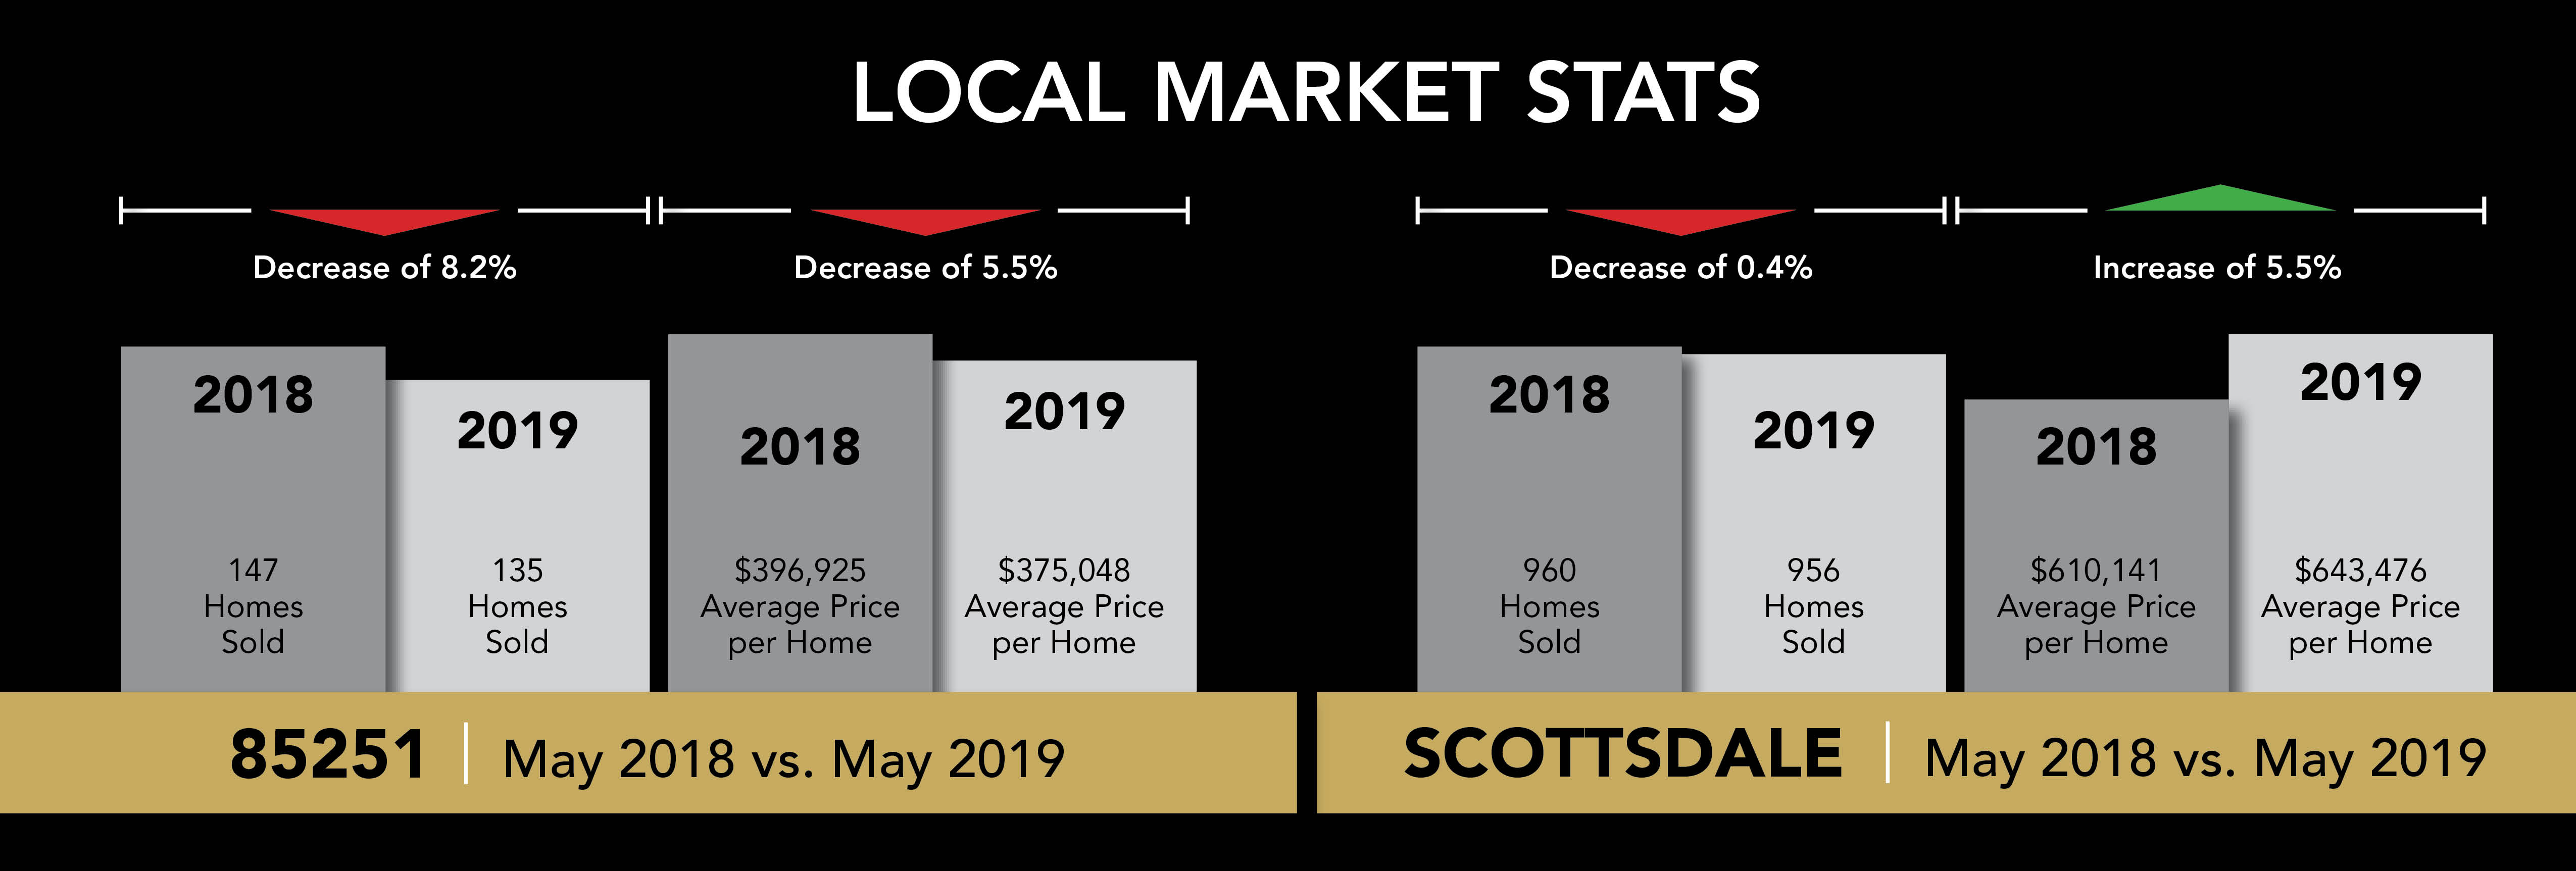 Local Market Stats Report